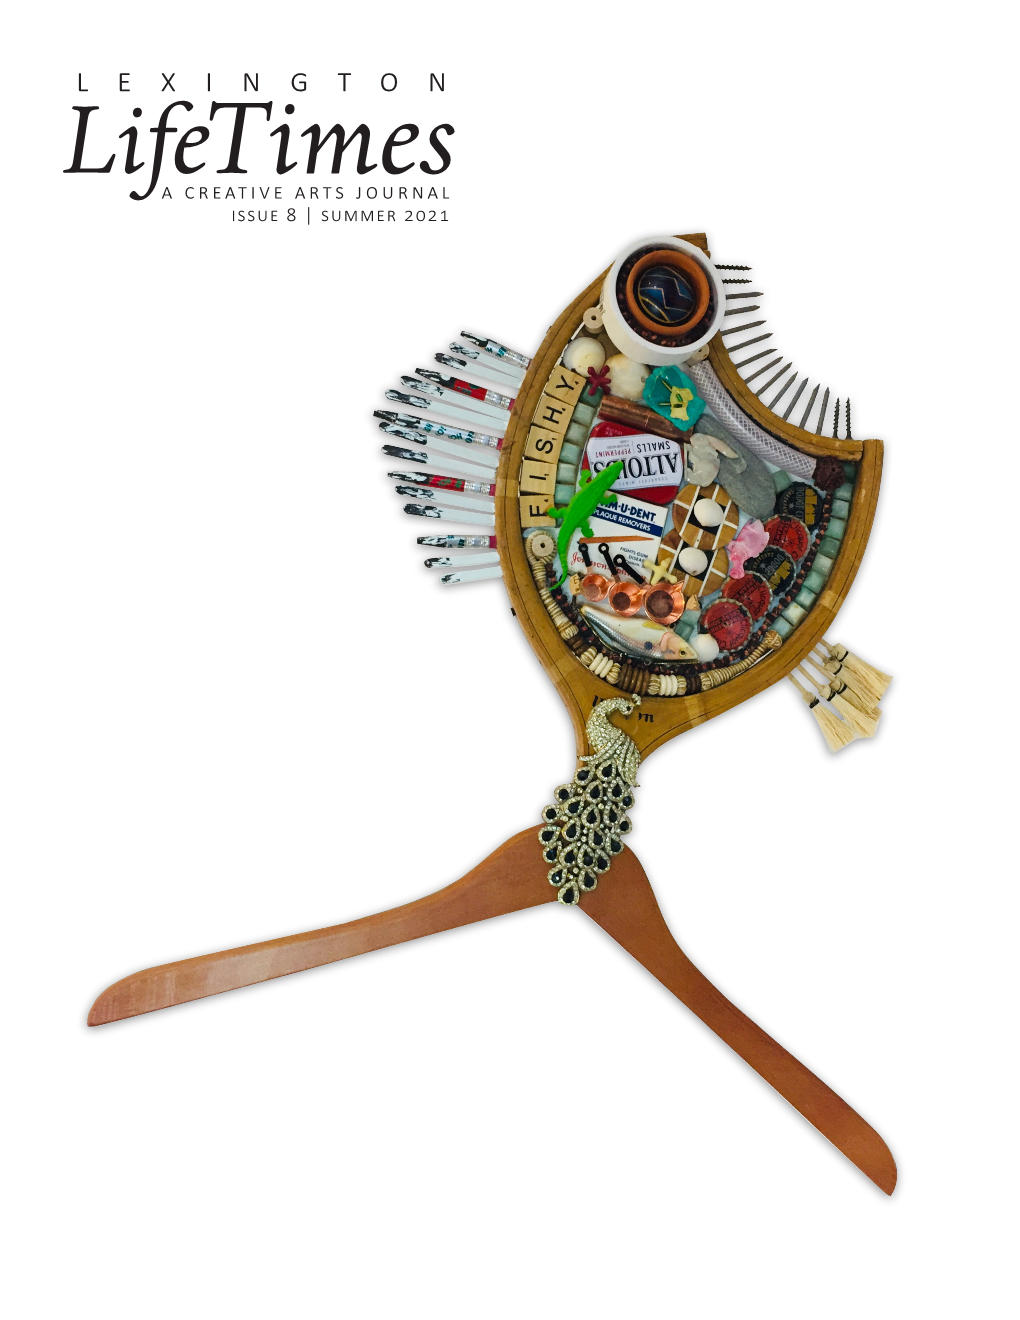 Lifetimes: a Creative Arts Journal